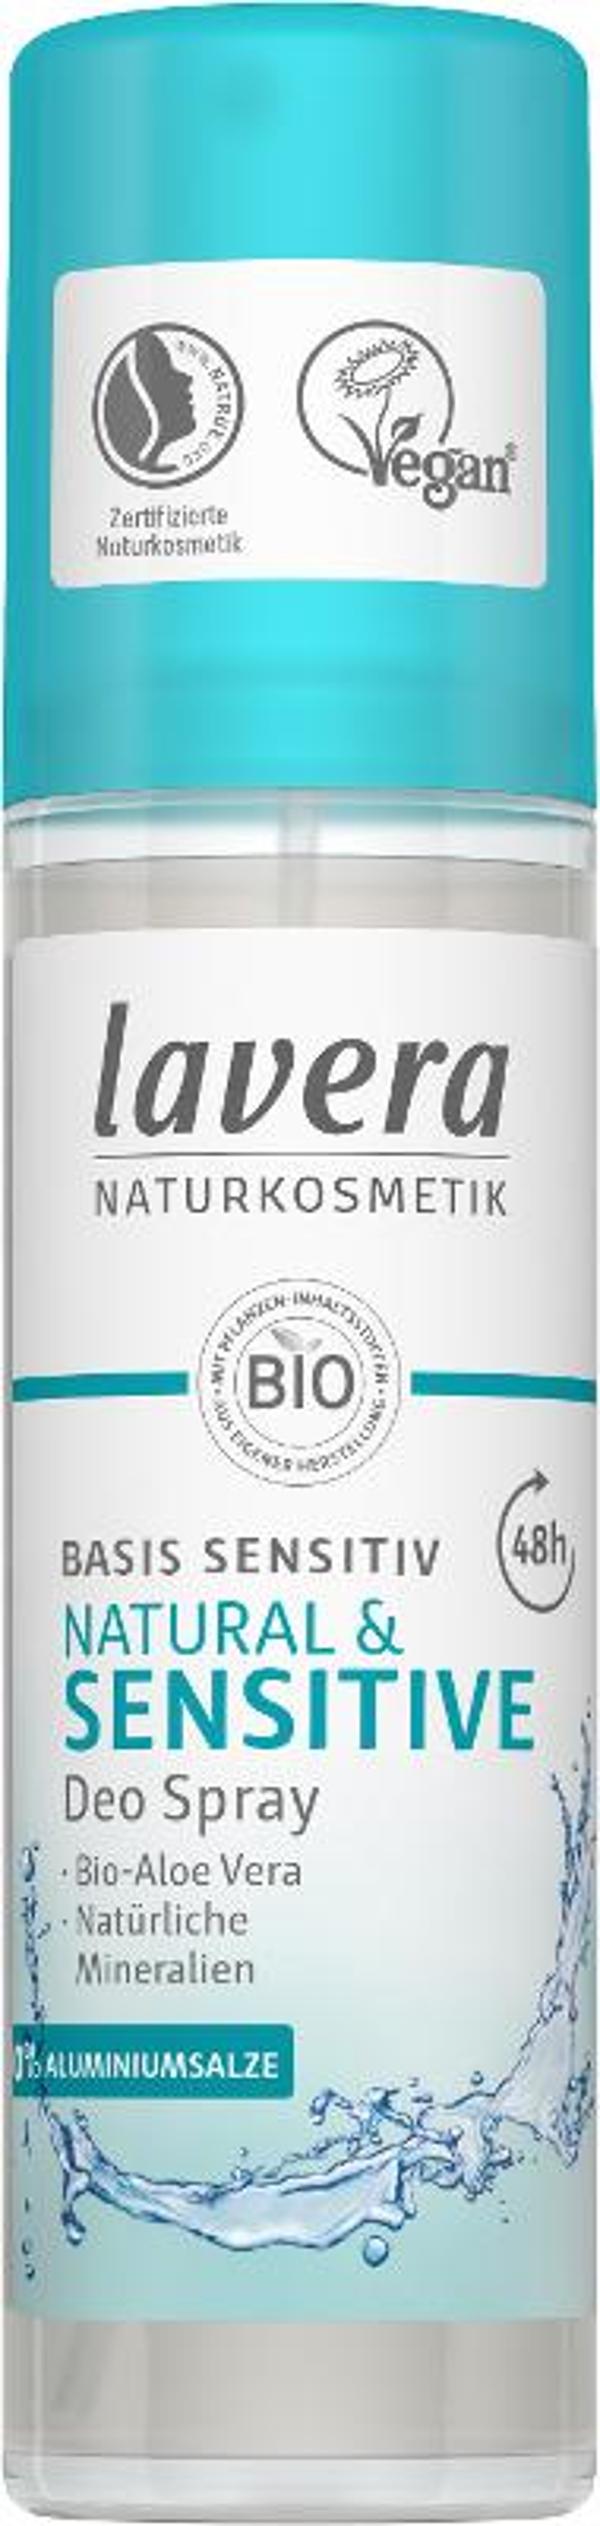 Produktfoto zu Deo Spray Basis Sensitive Lavera